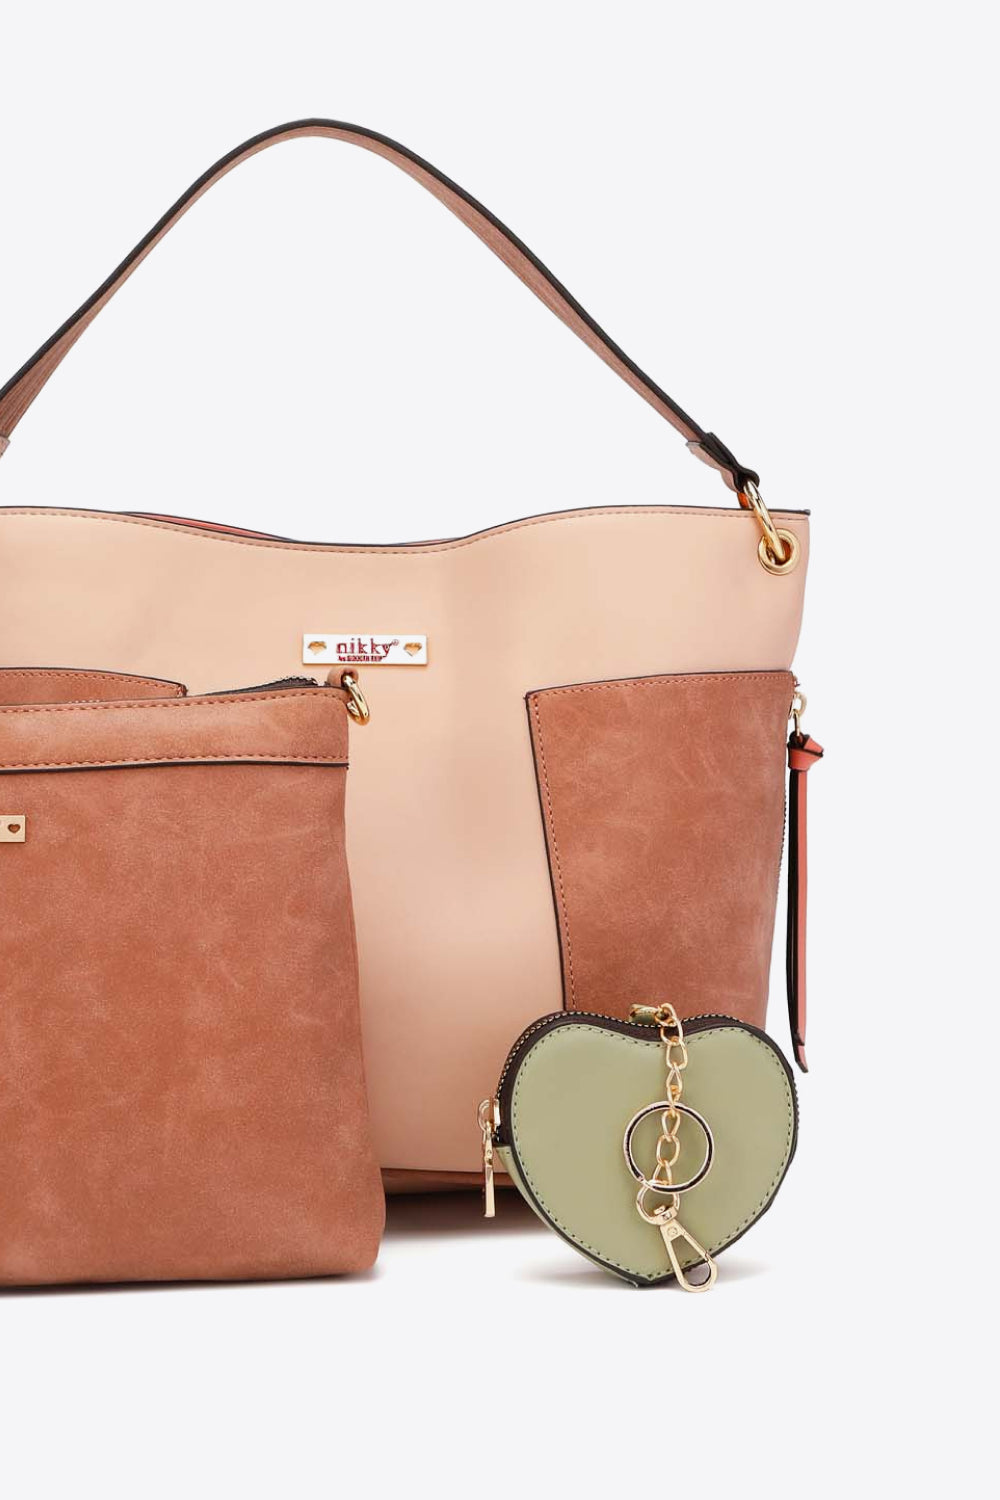 Women's Gift Bag Incredible Option To Impress | by Emily Ella | Medium